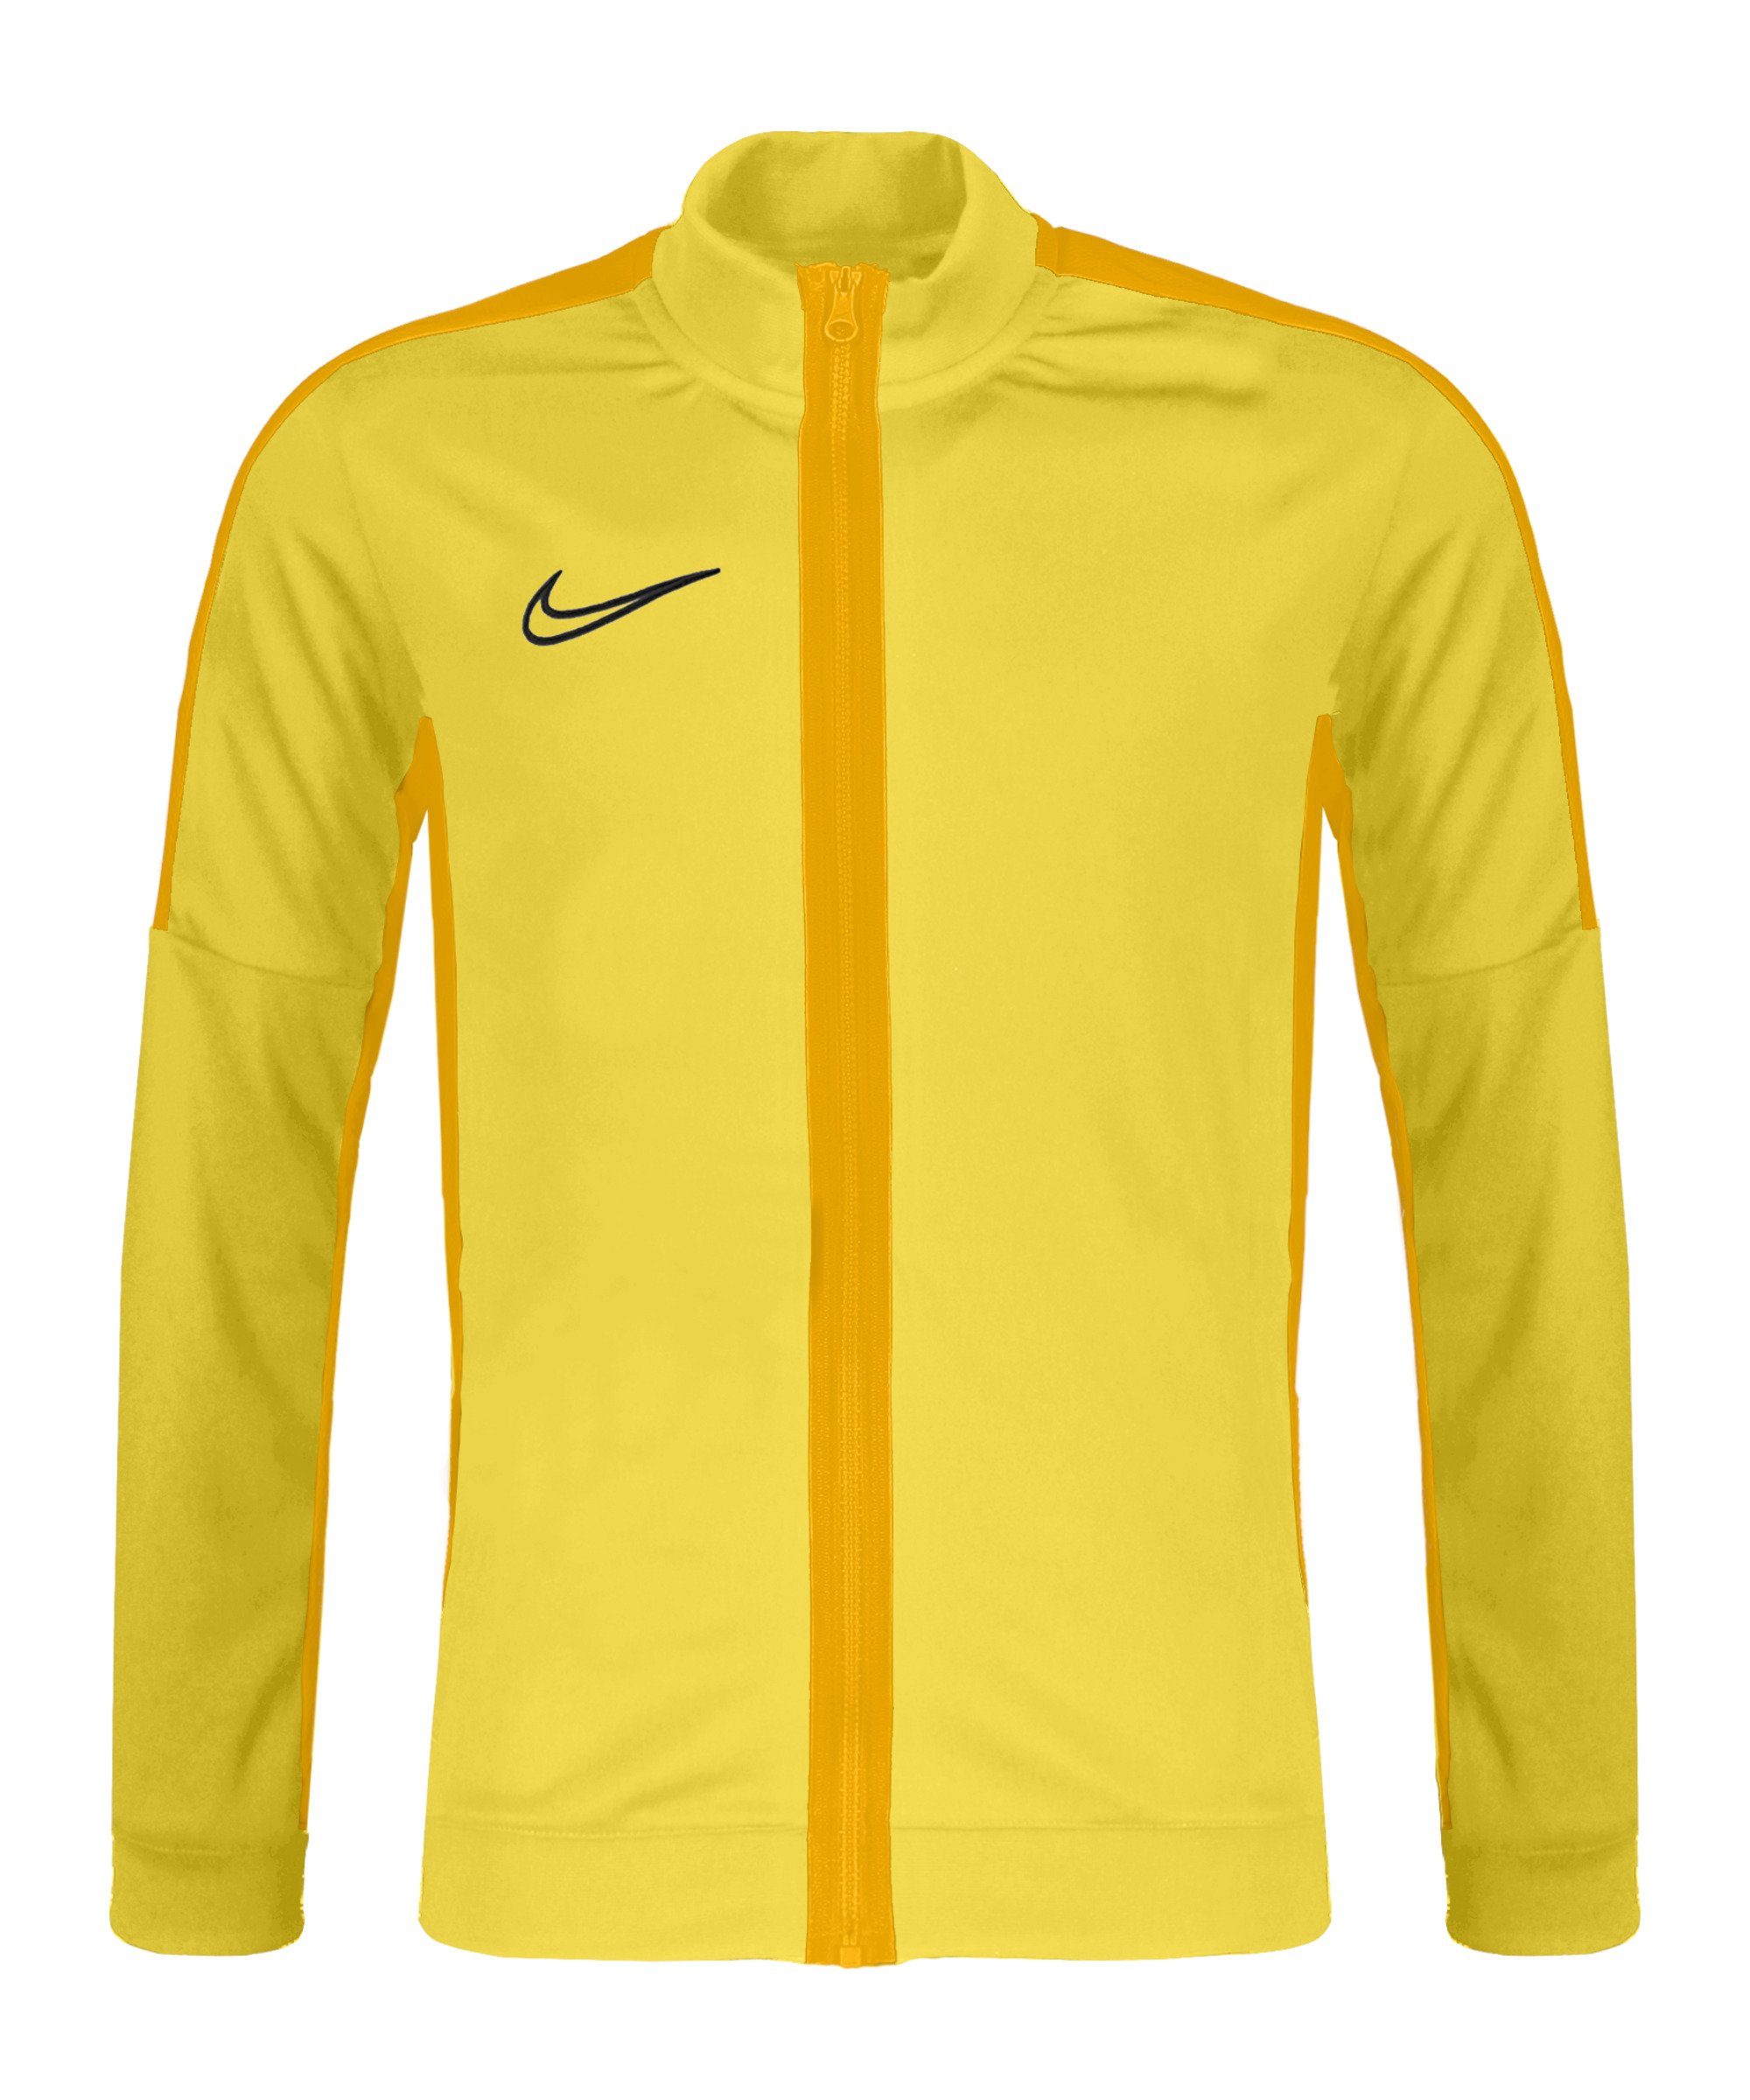 Academy Nike gelbgoldschwarz Sweatjacke 23 Trainingsjacke